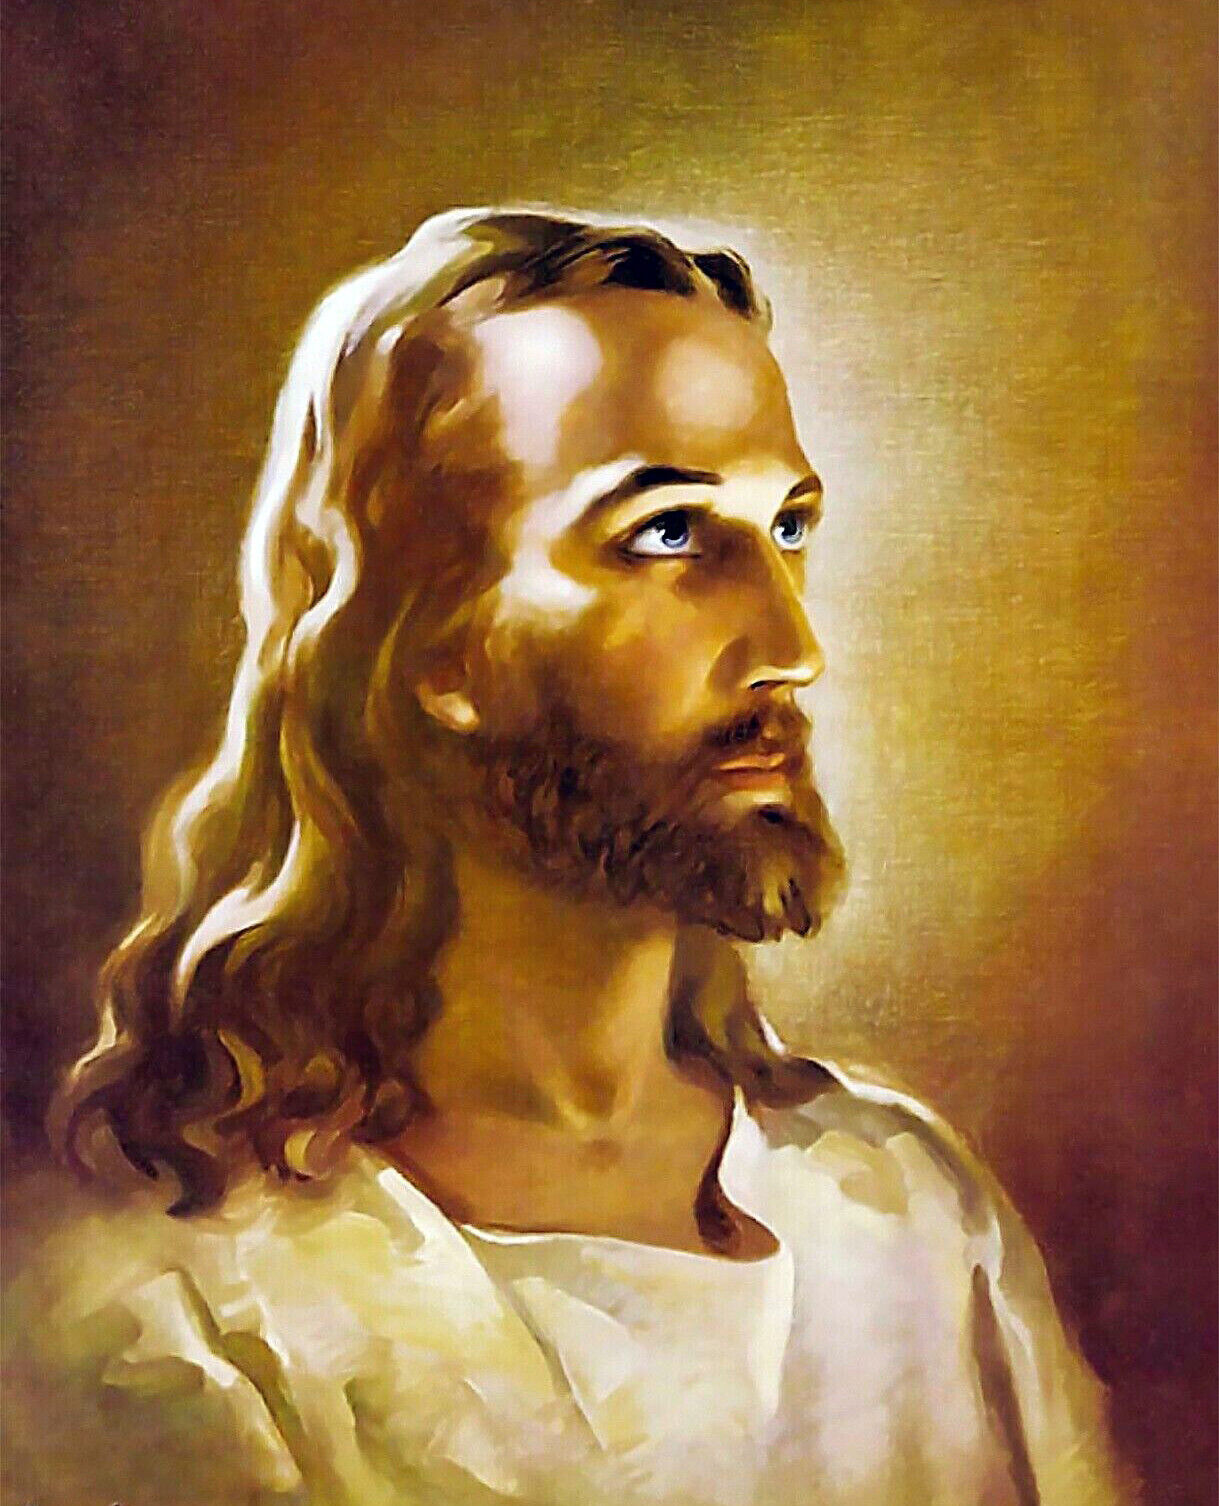 JESUS CHRIST 8X10 PHOTO PICTURE CHRISTIAN ART 4